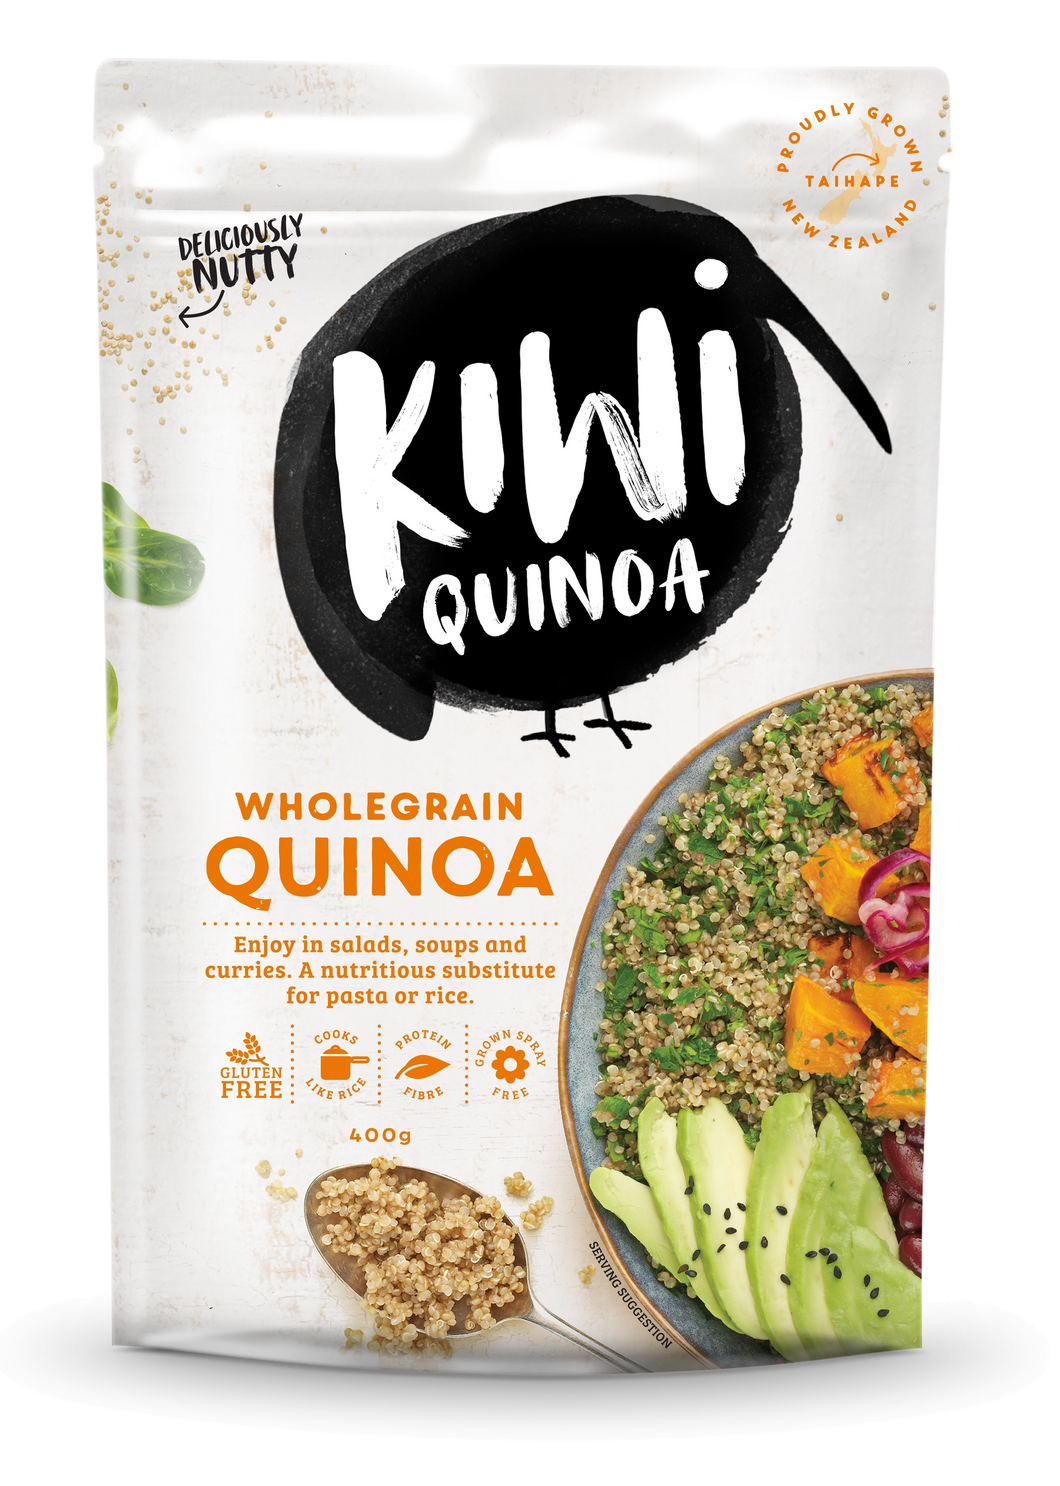 400g package of Kiwi Quinoa, 全粒キウイキヌアのパッケージ